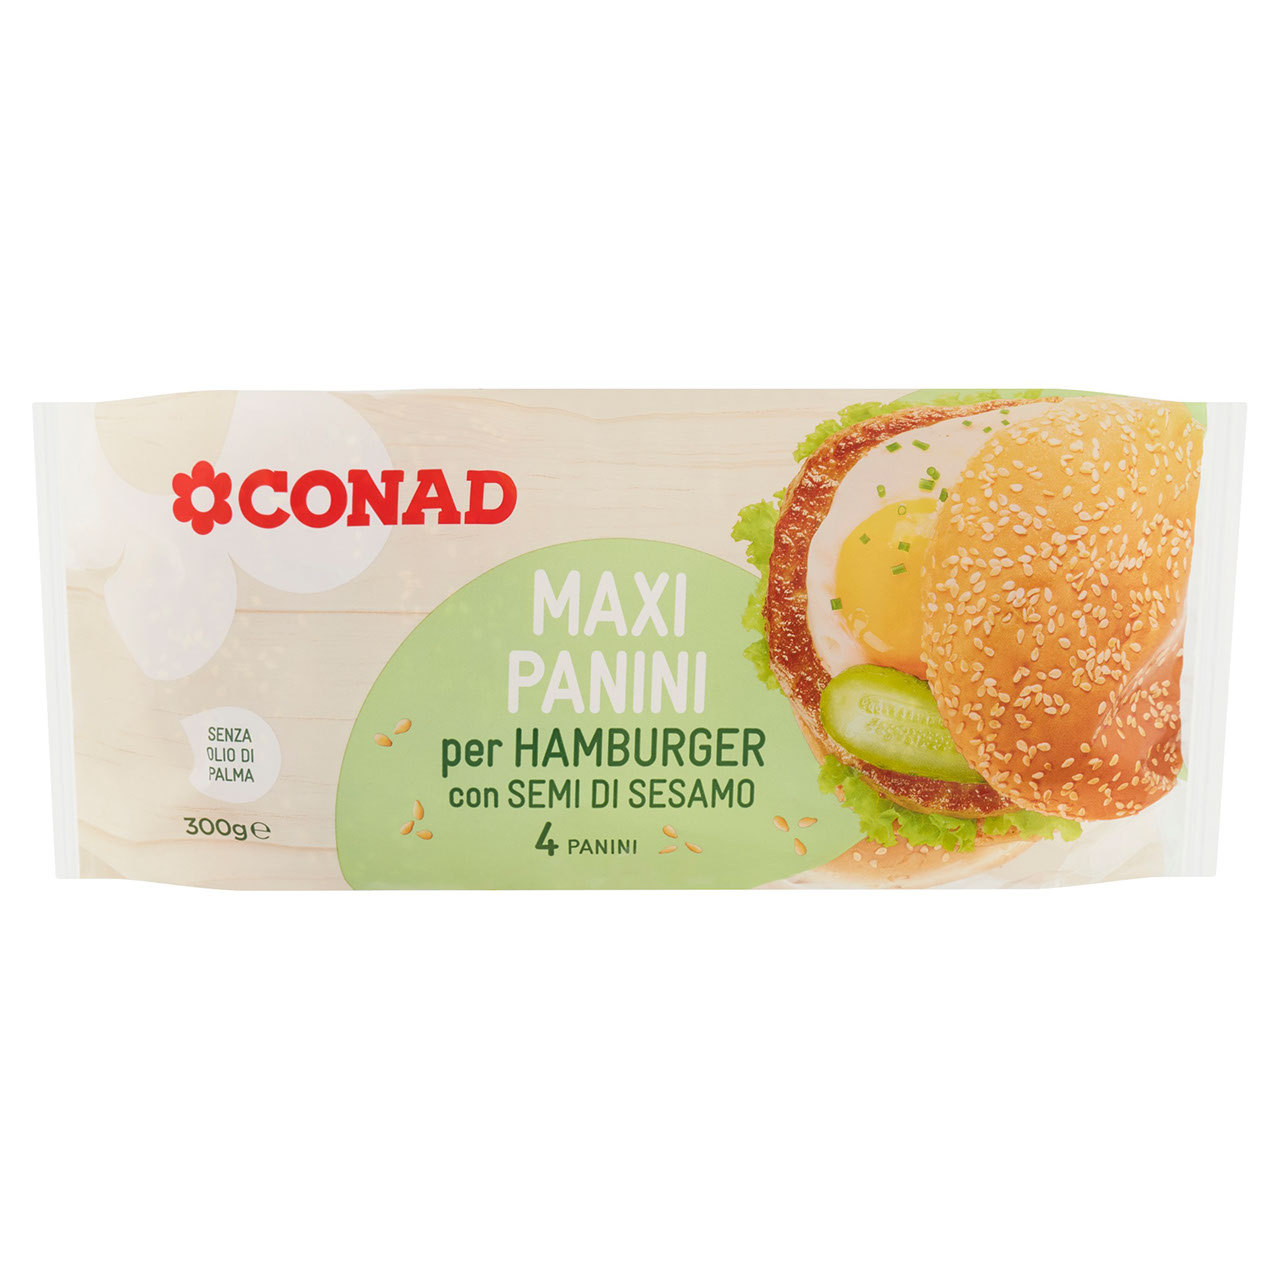 Maxi Panini per Hamburger Conad in vendita online